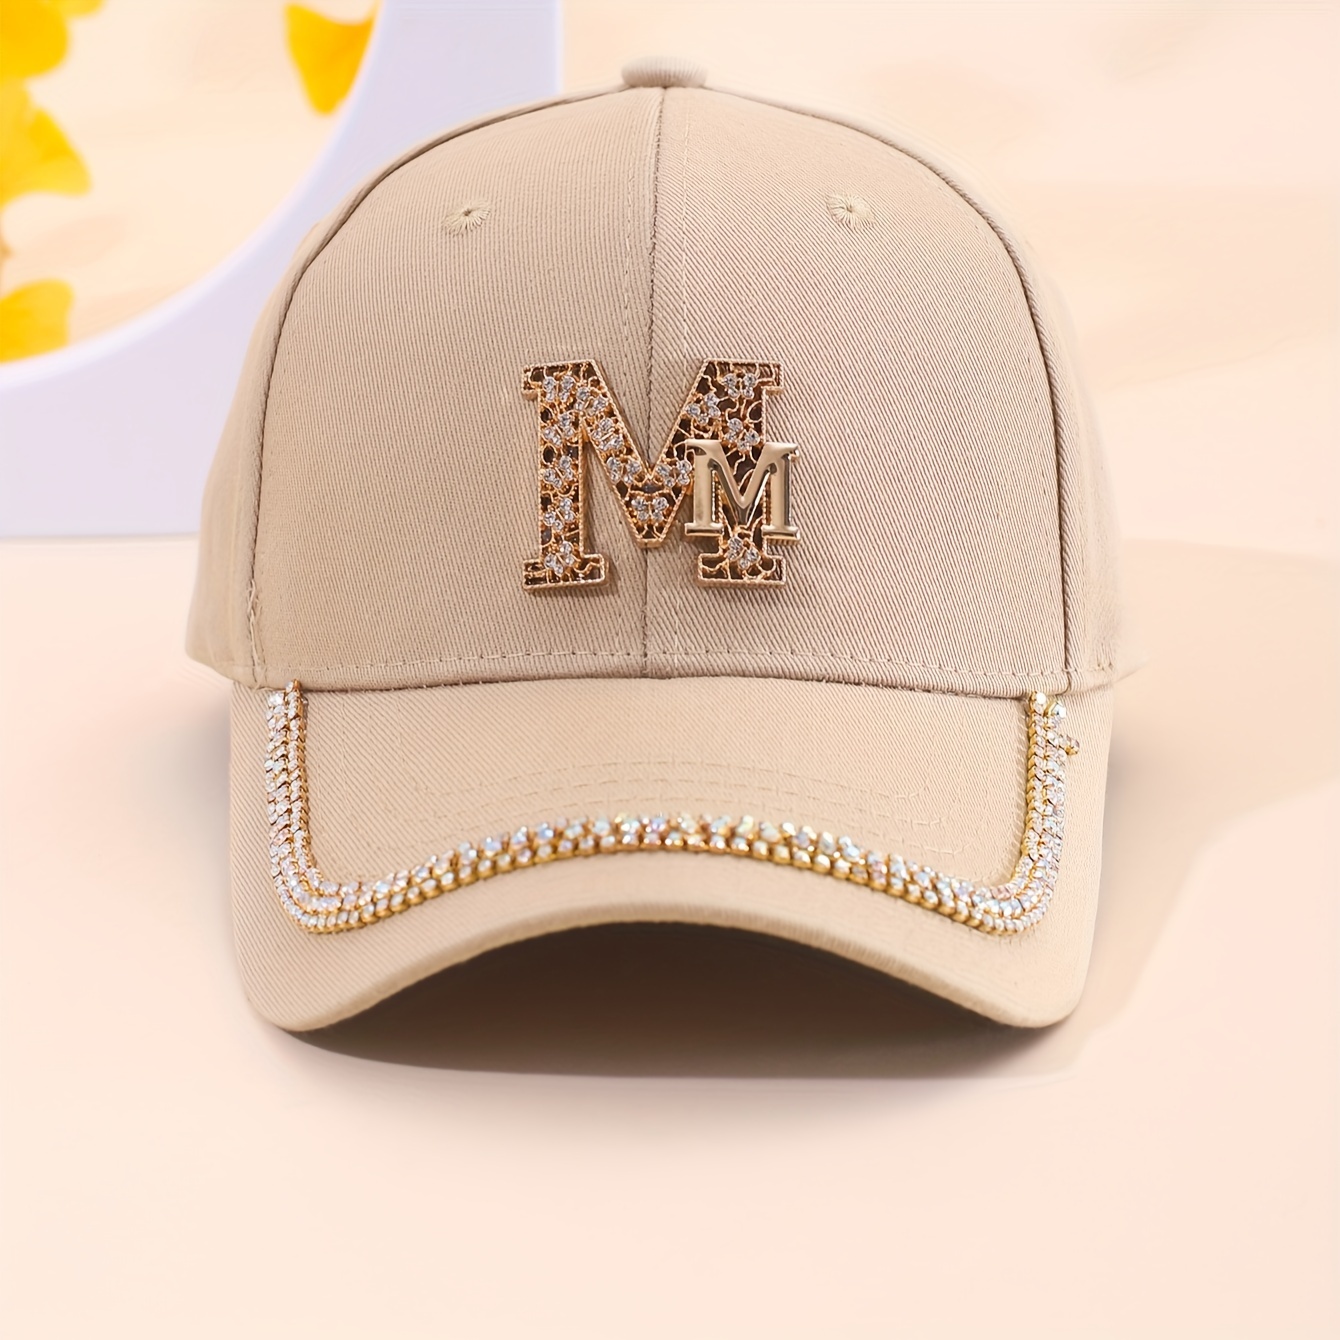 

M Rhinestone Decorative Baseball Cap Monochrome Adjustable Sunscreen Peaked Hats Casual Outdoor Sunshade Hat For 4 Seasons